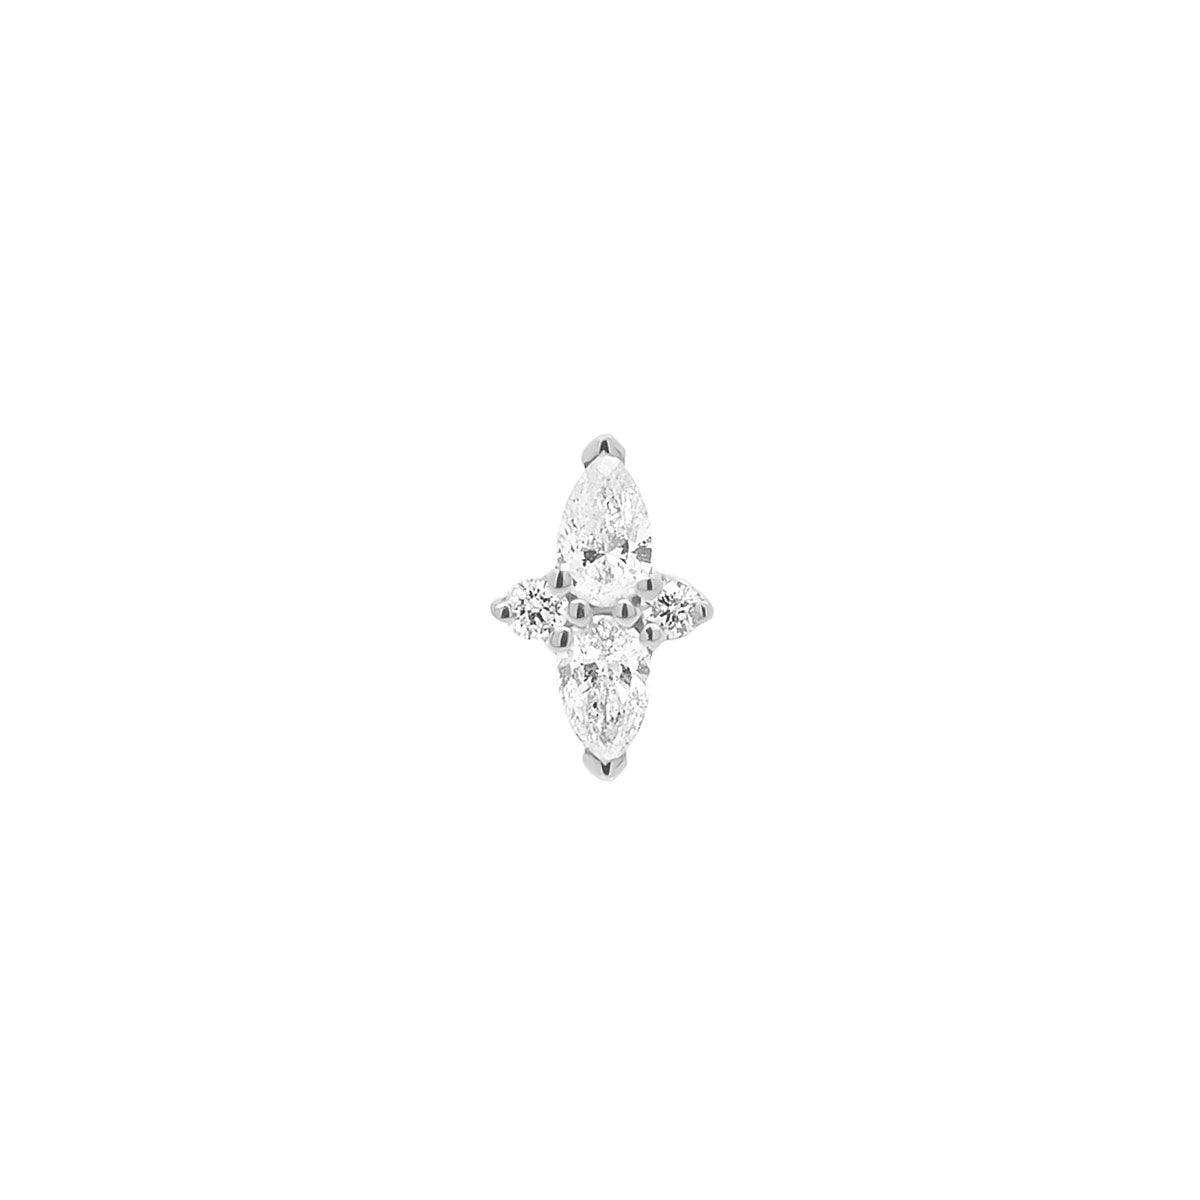 Louis Vuitton Monogram Fusion diamond engagement ring